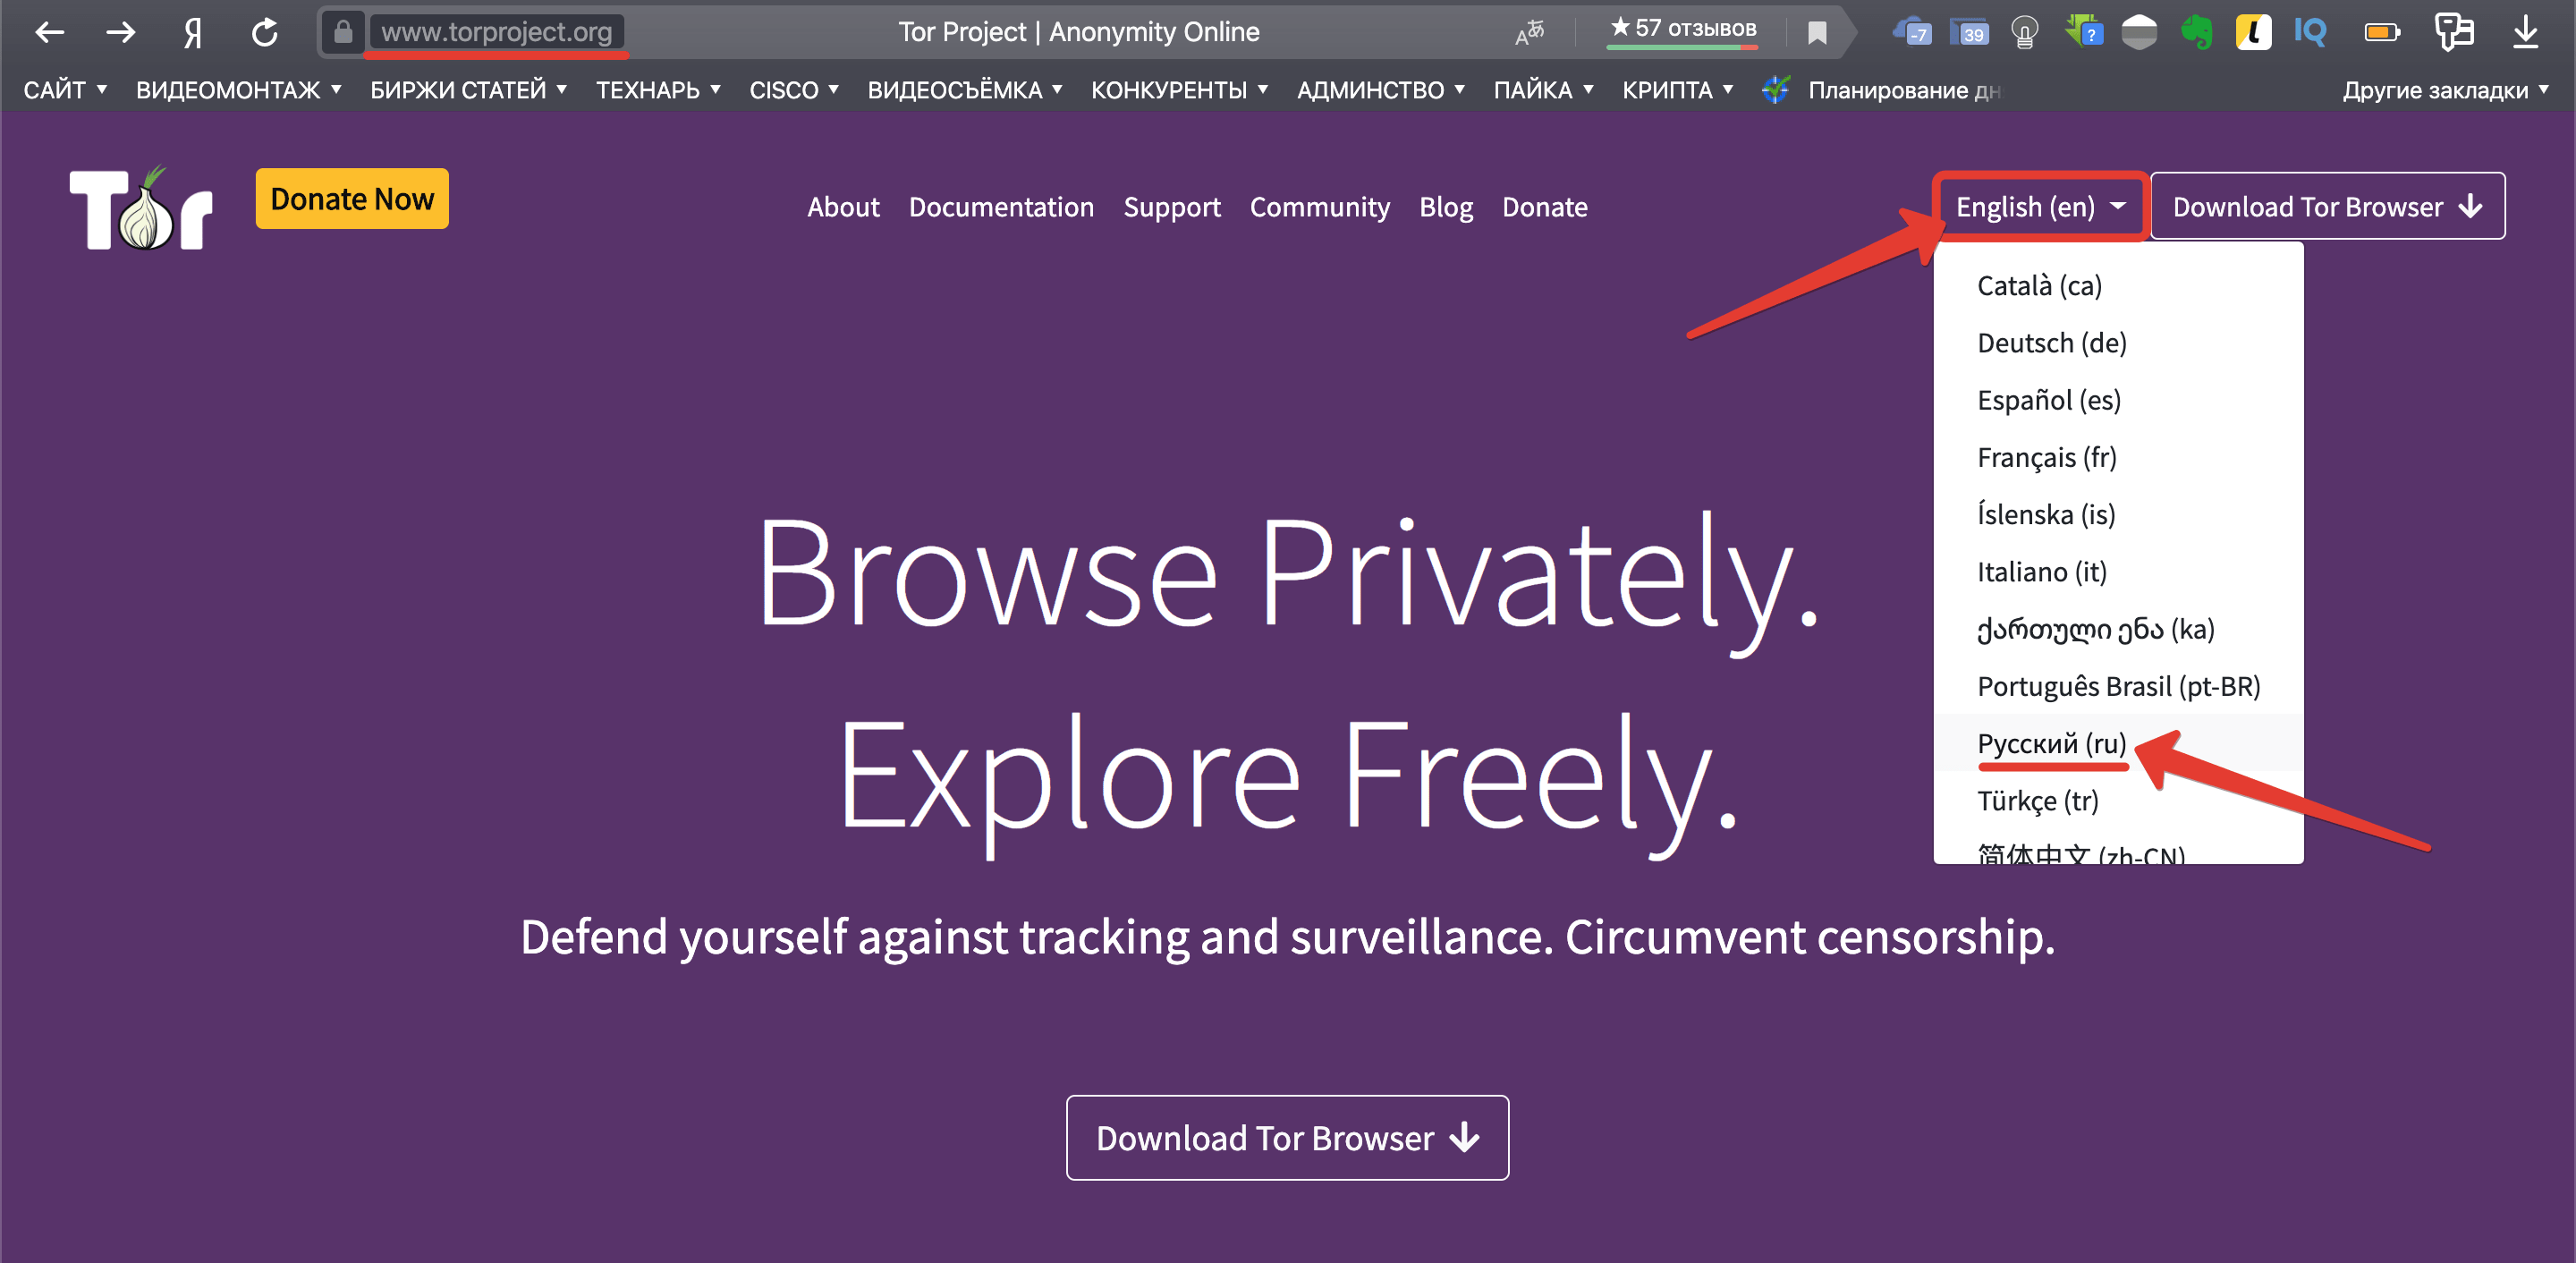 Тор браузер не открывает сайт даркнет как blacksprut ubuntu даркнет